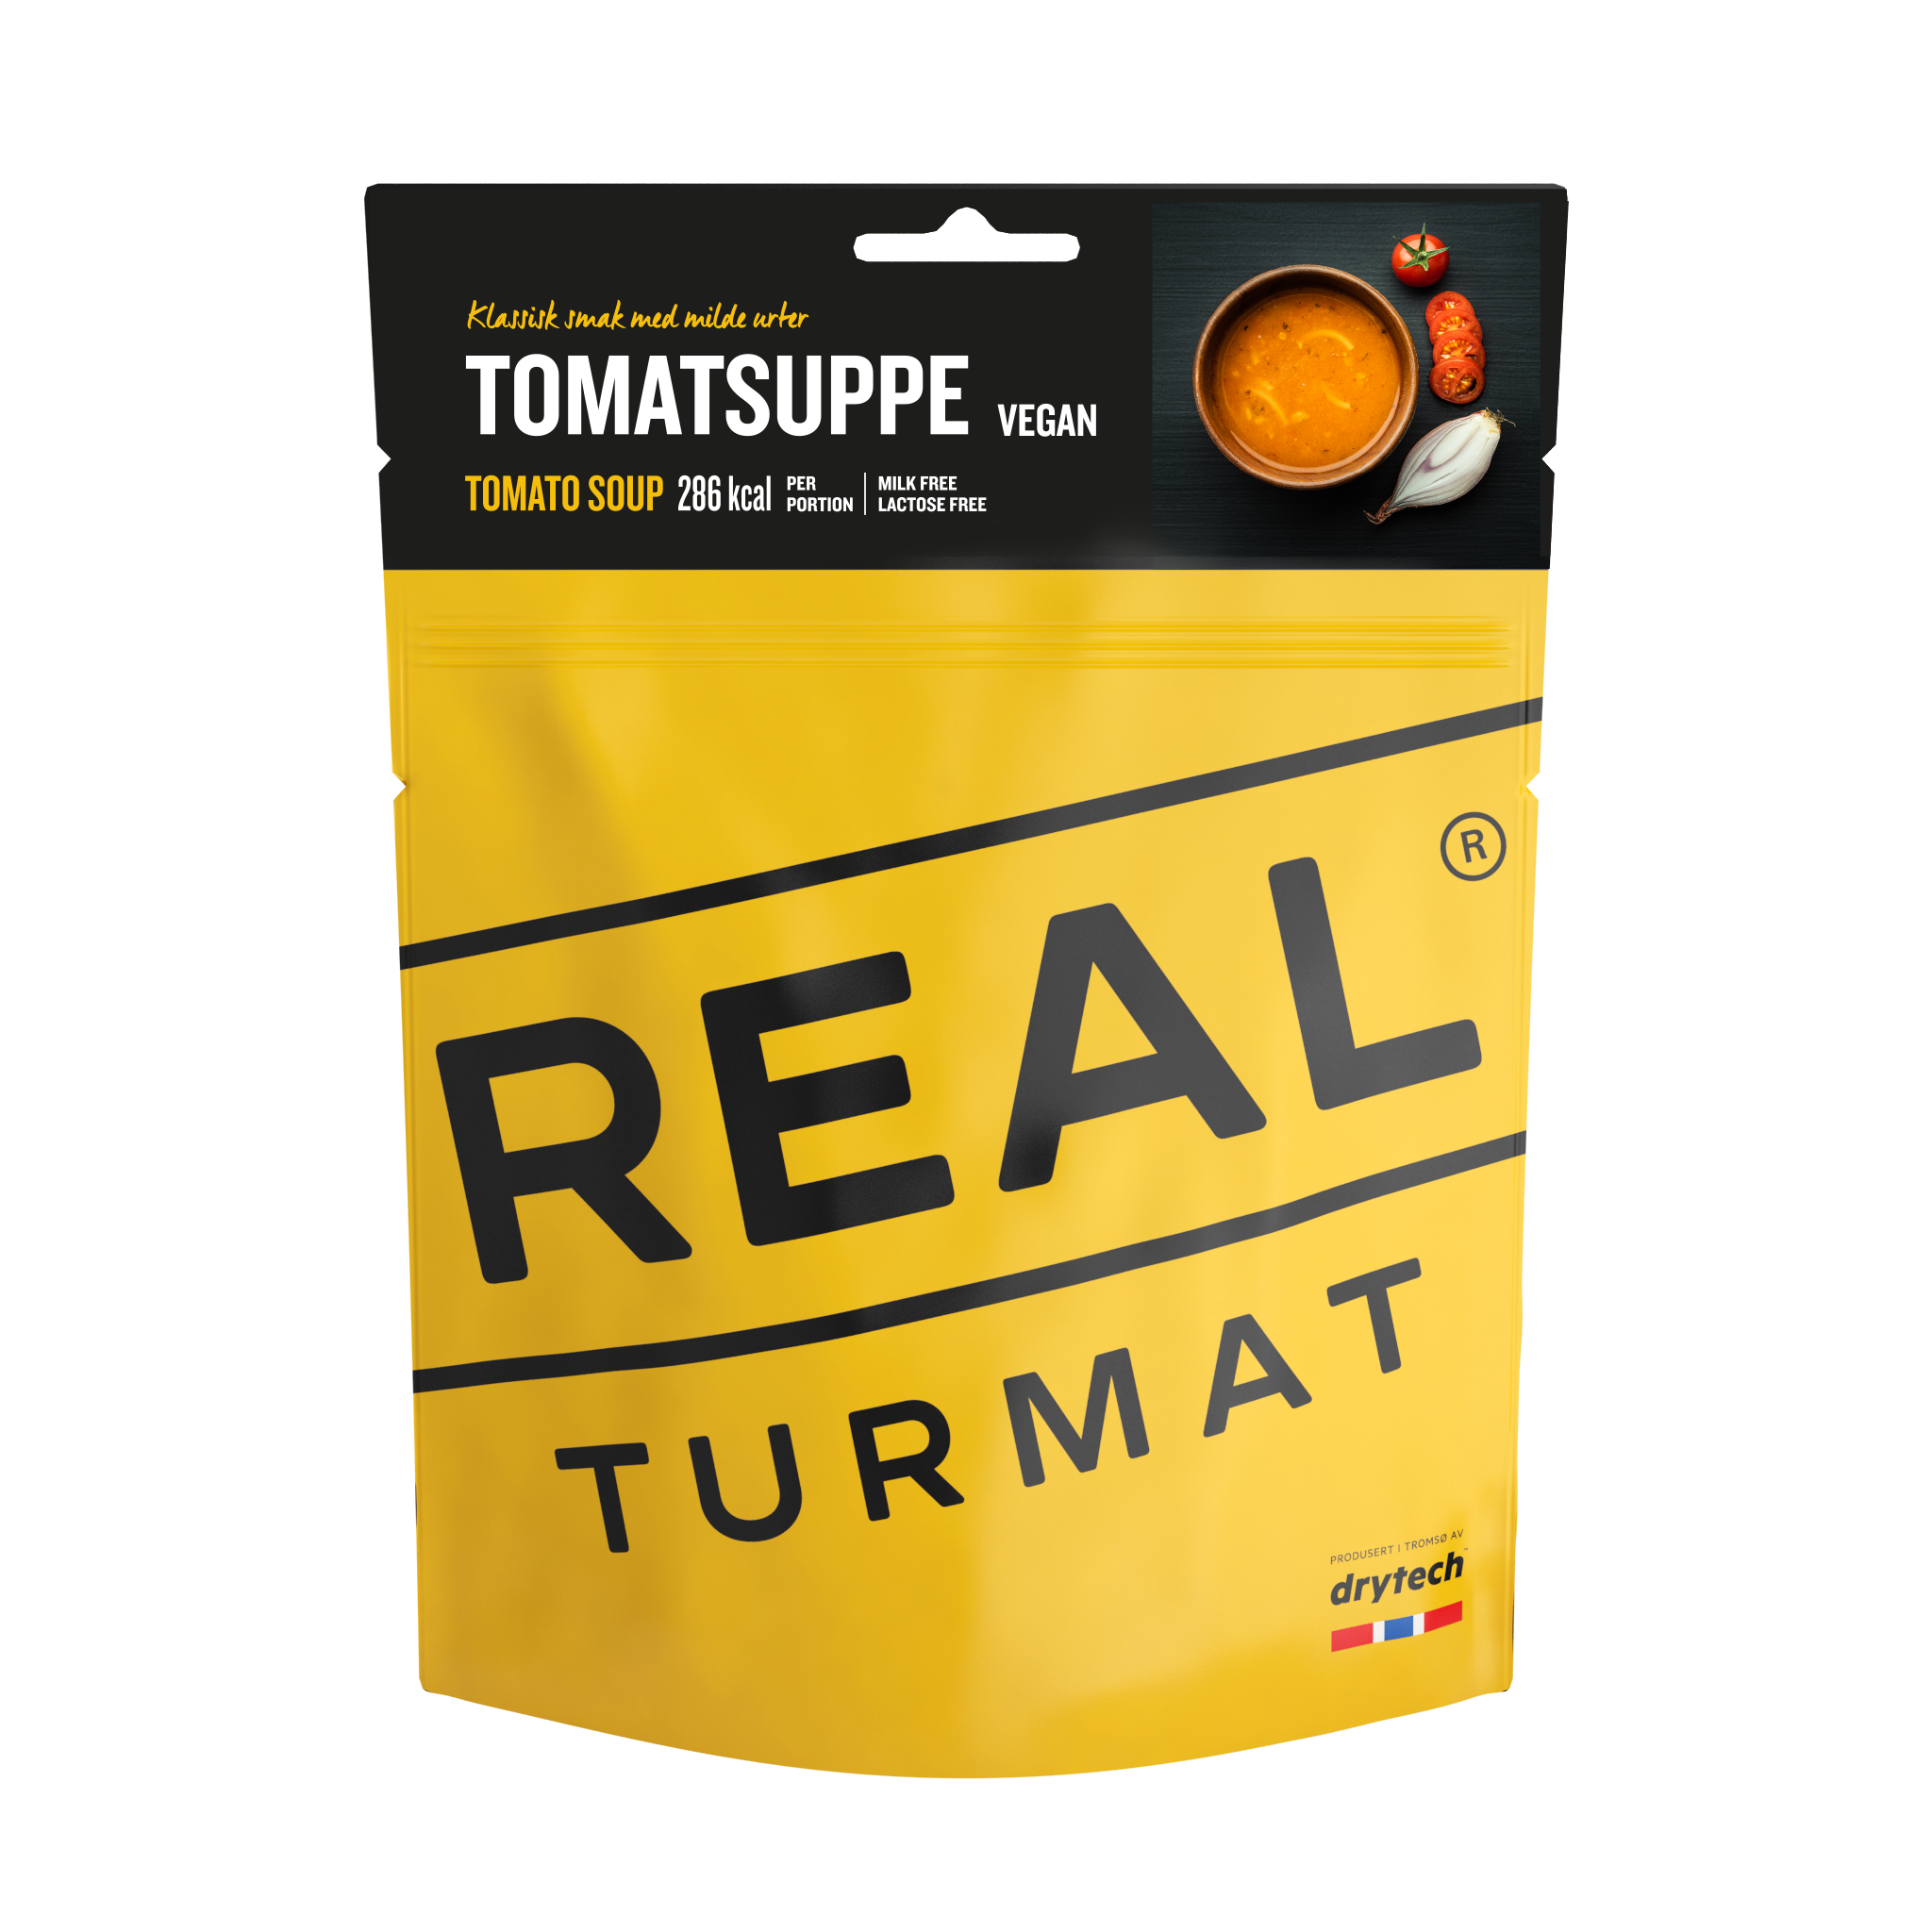 Real Turmat Tomatsuppe 